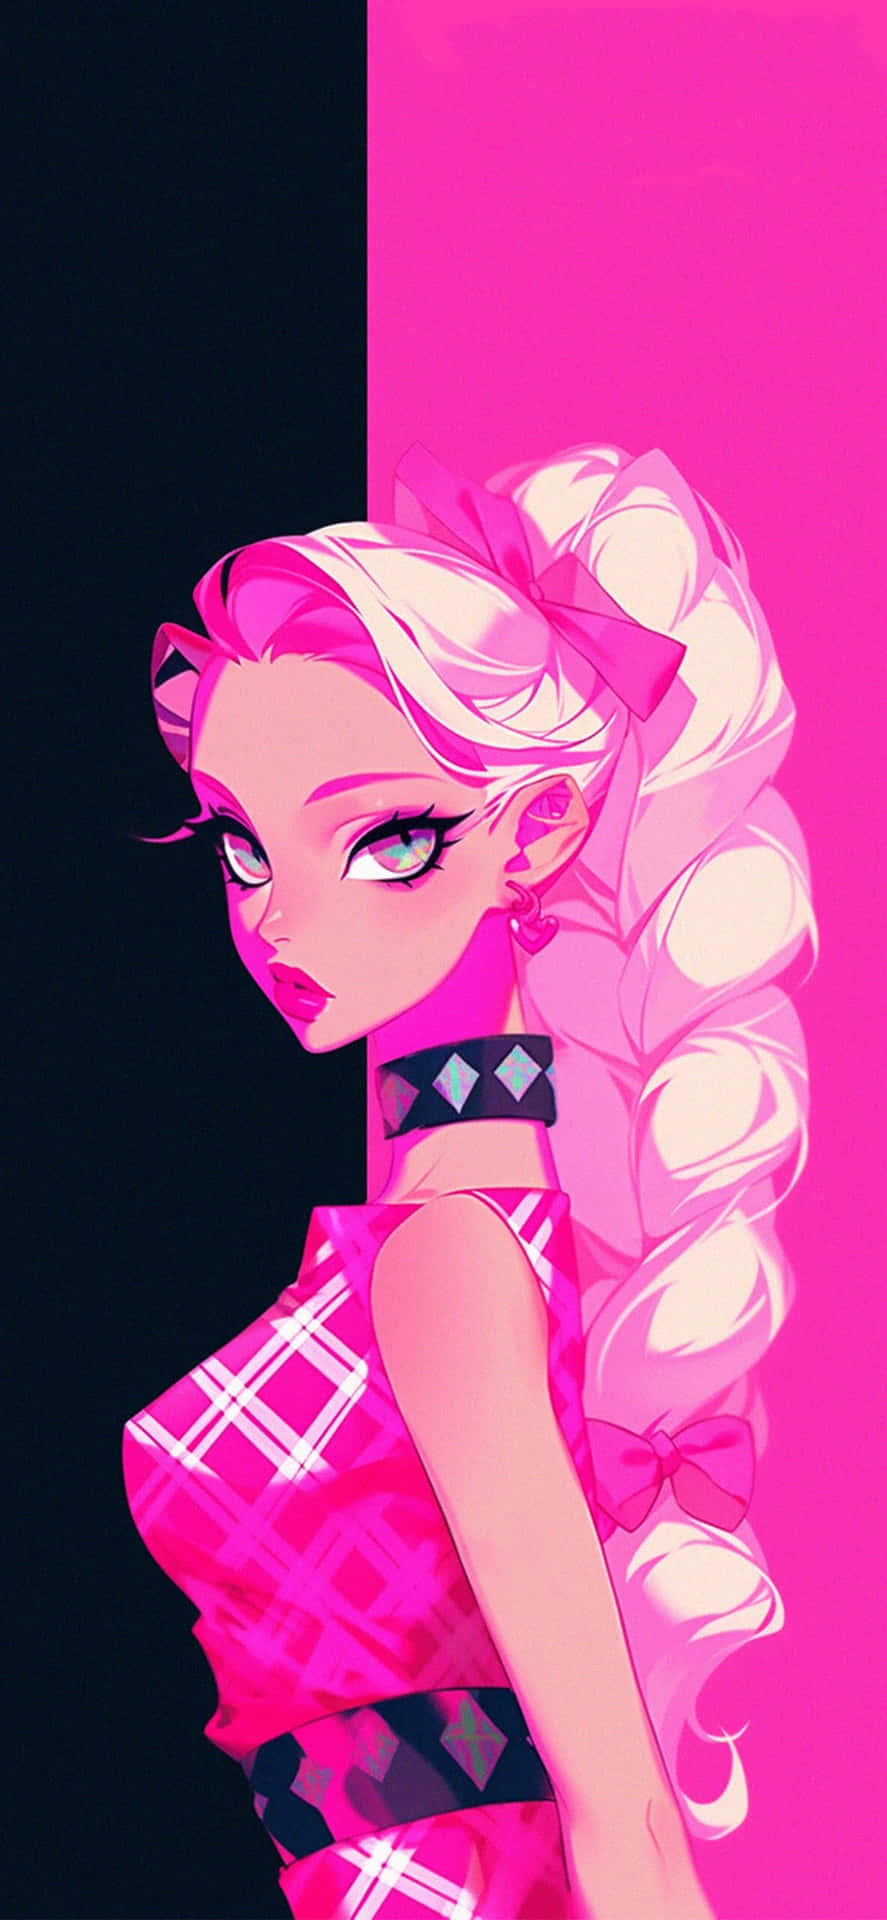 Pink Barbie Glamour Illustration.jpg Wallpaper